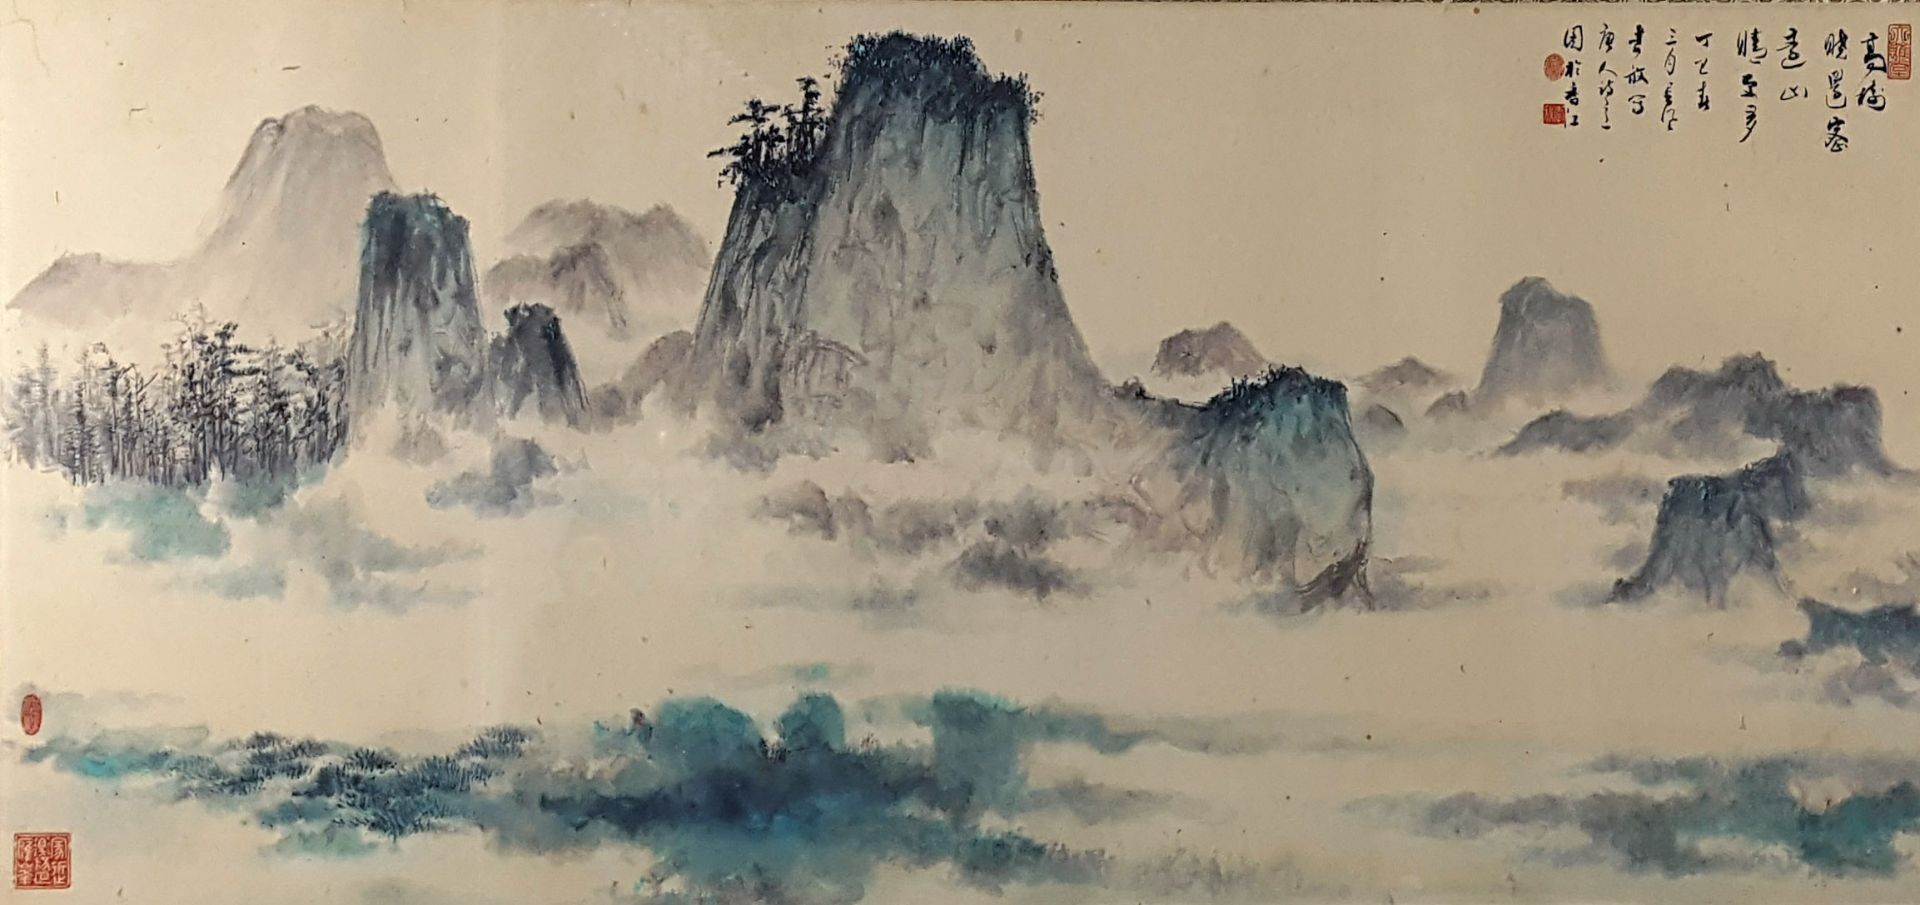 ASIAN SCHOOL (XIX - XX). Landscape with mountains.57 cm x 120 cm. Ink on paper. Watercolor?